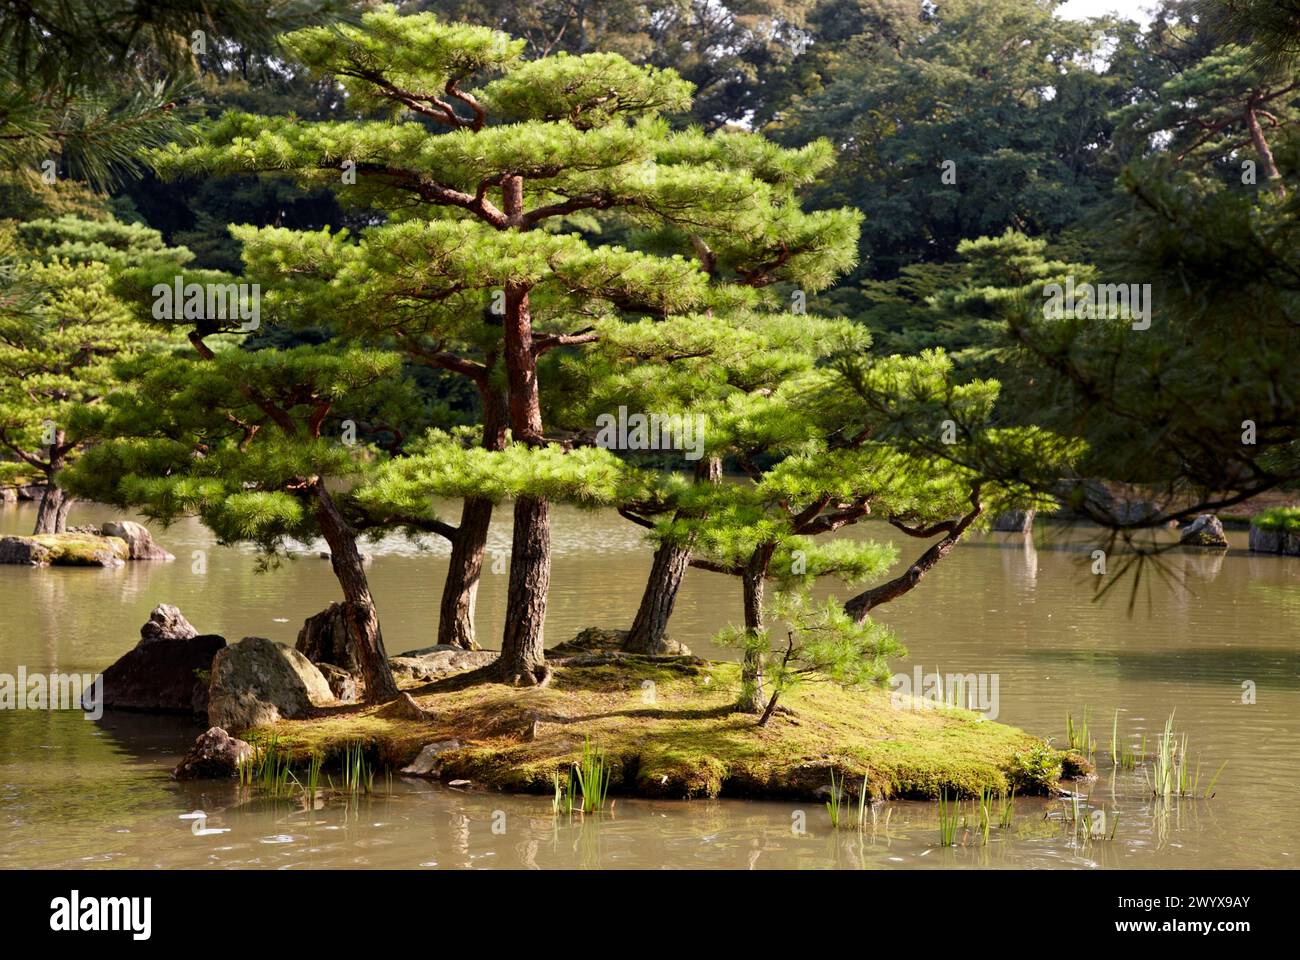 Gardens, Kinkakuji Temple, The Golden Pavilion, Rokuon-ji temple, Kyoto, Japan. Stock Photo